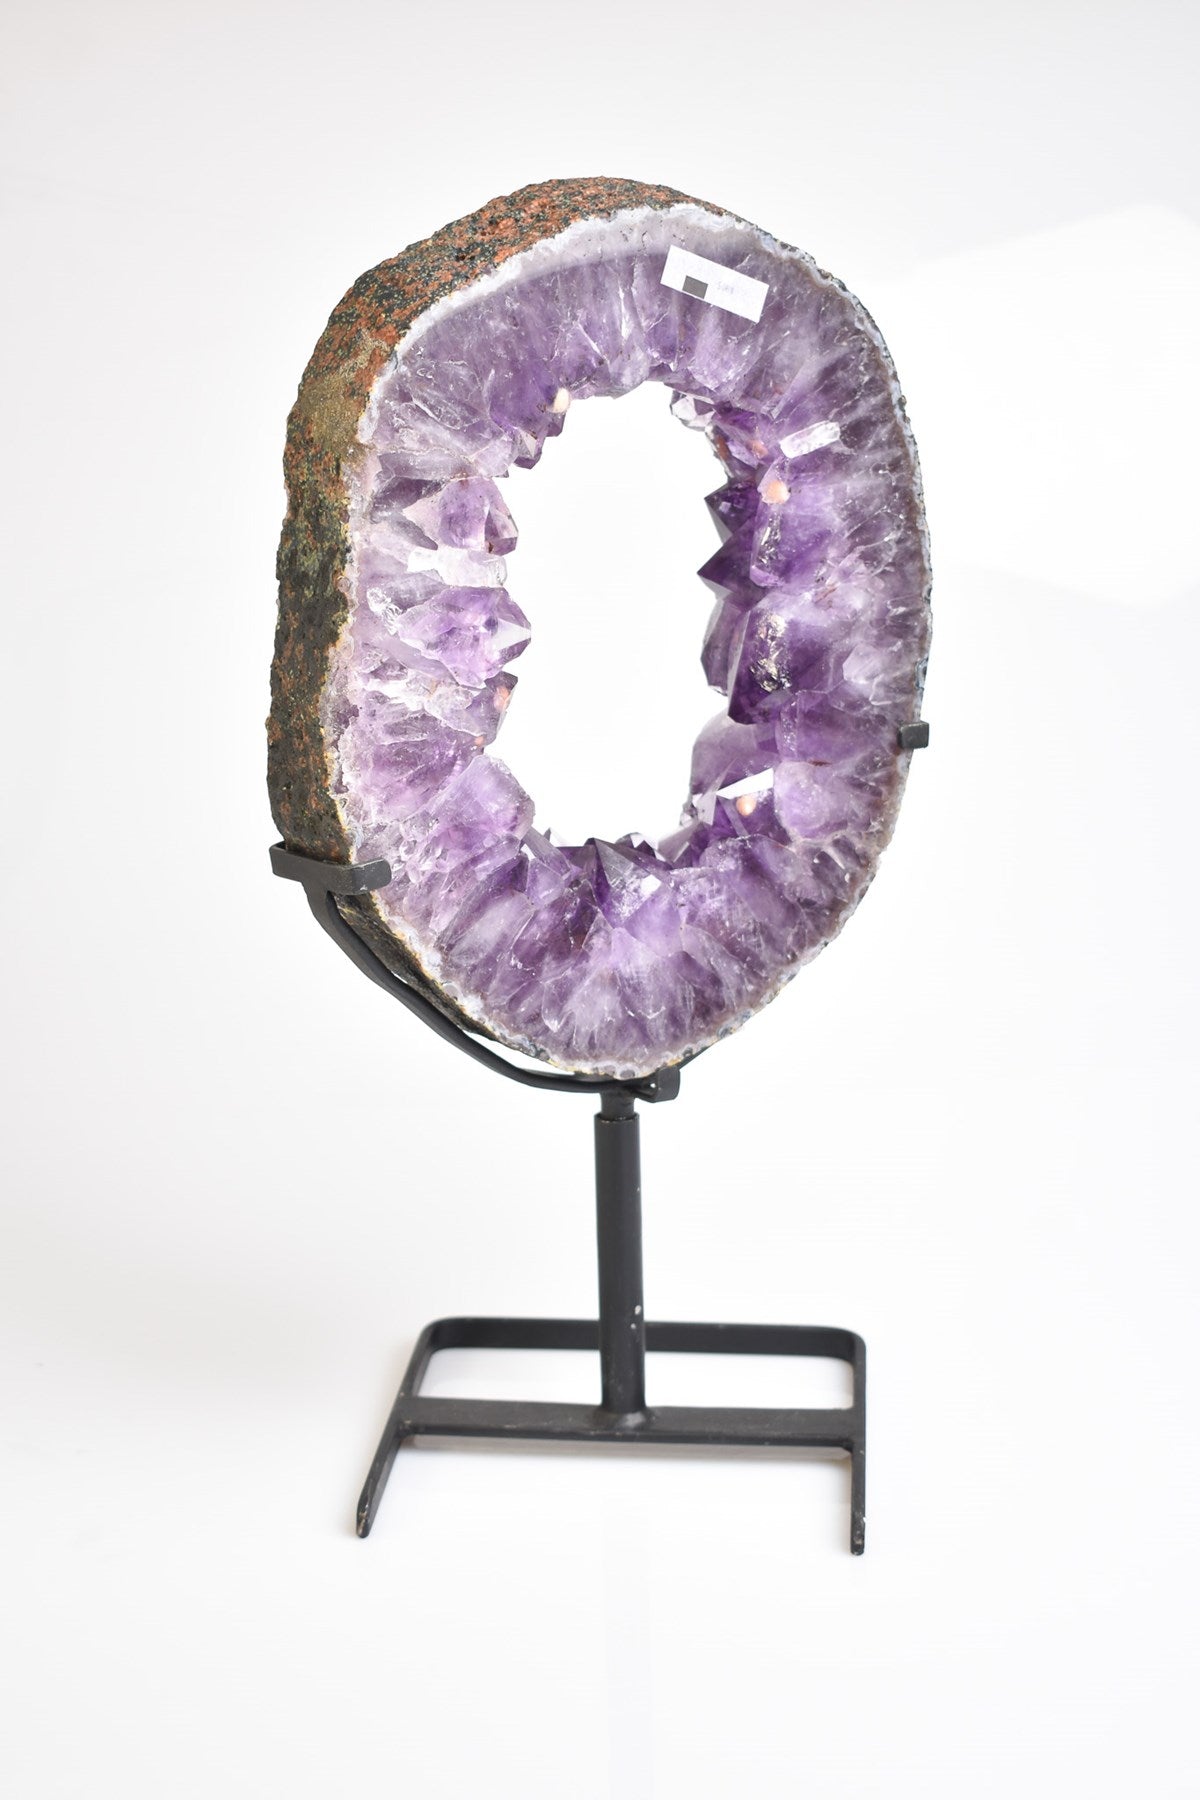 Large Brazilian Amethyst Geode on Custom Stand